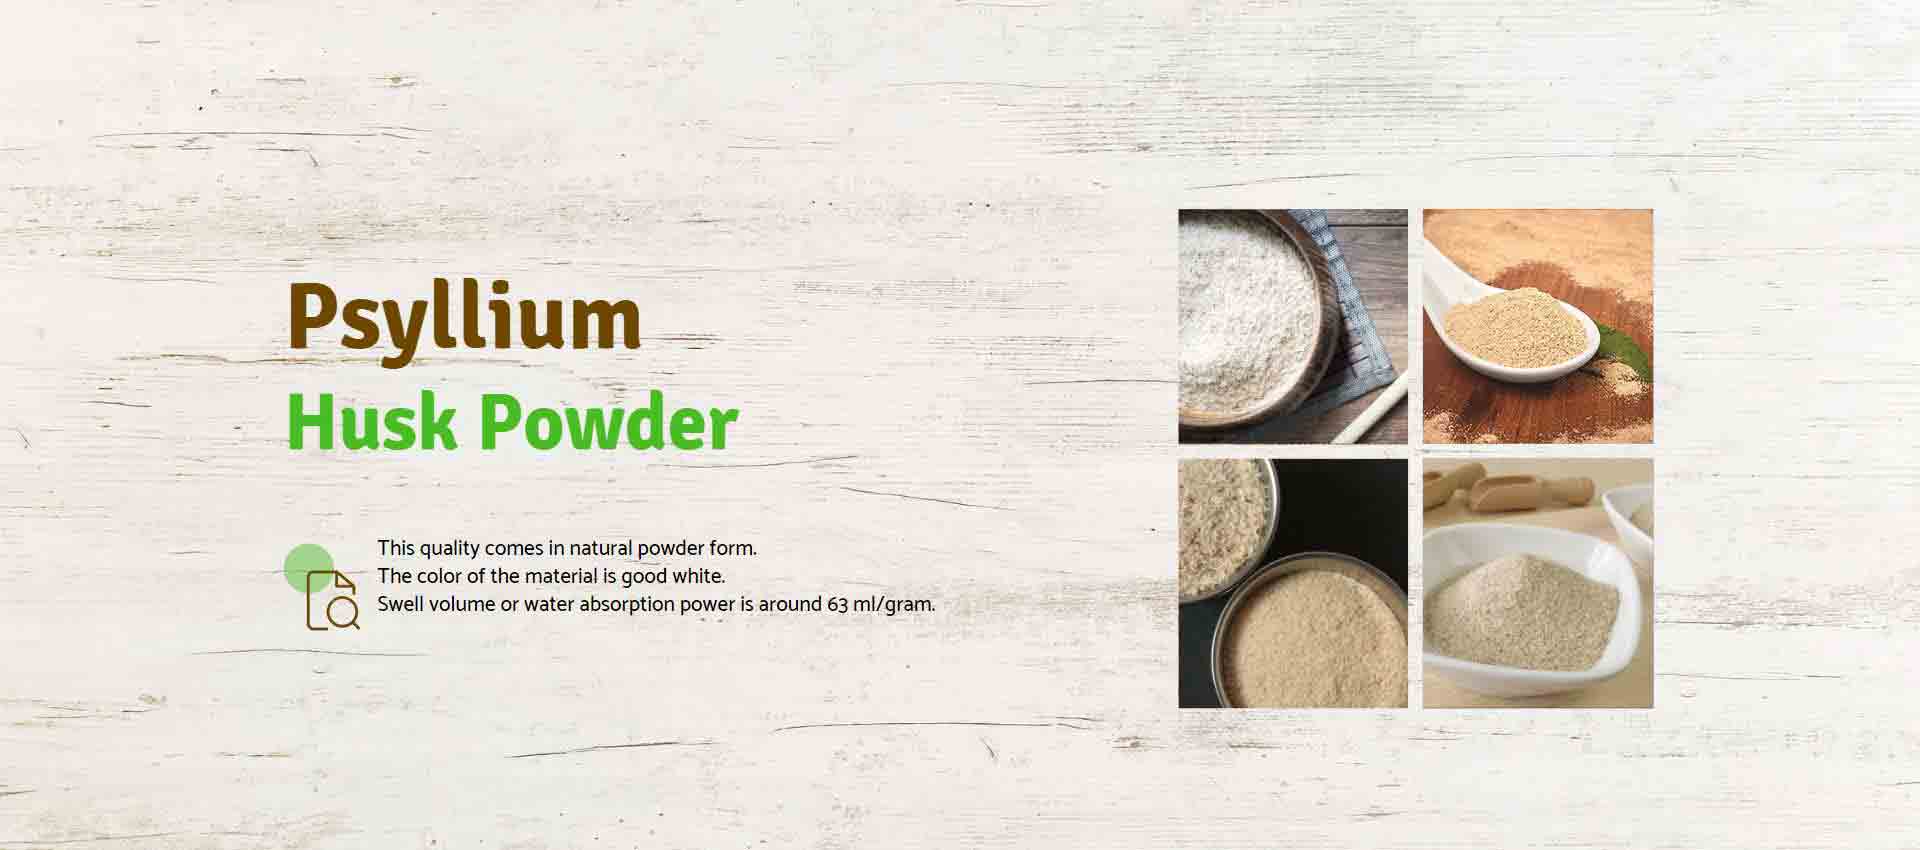 Psyllium Husk Powder Manufacturers in Belgium